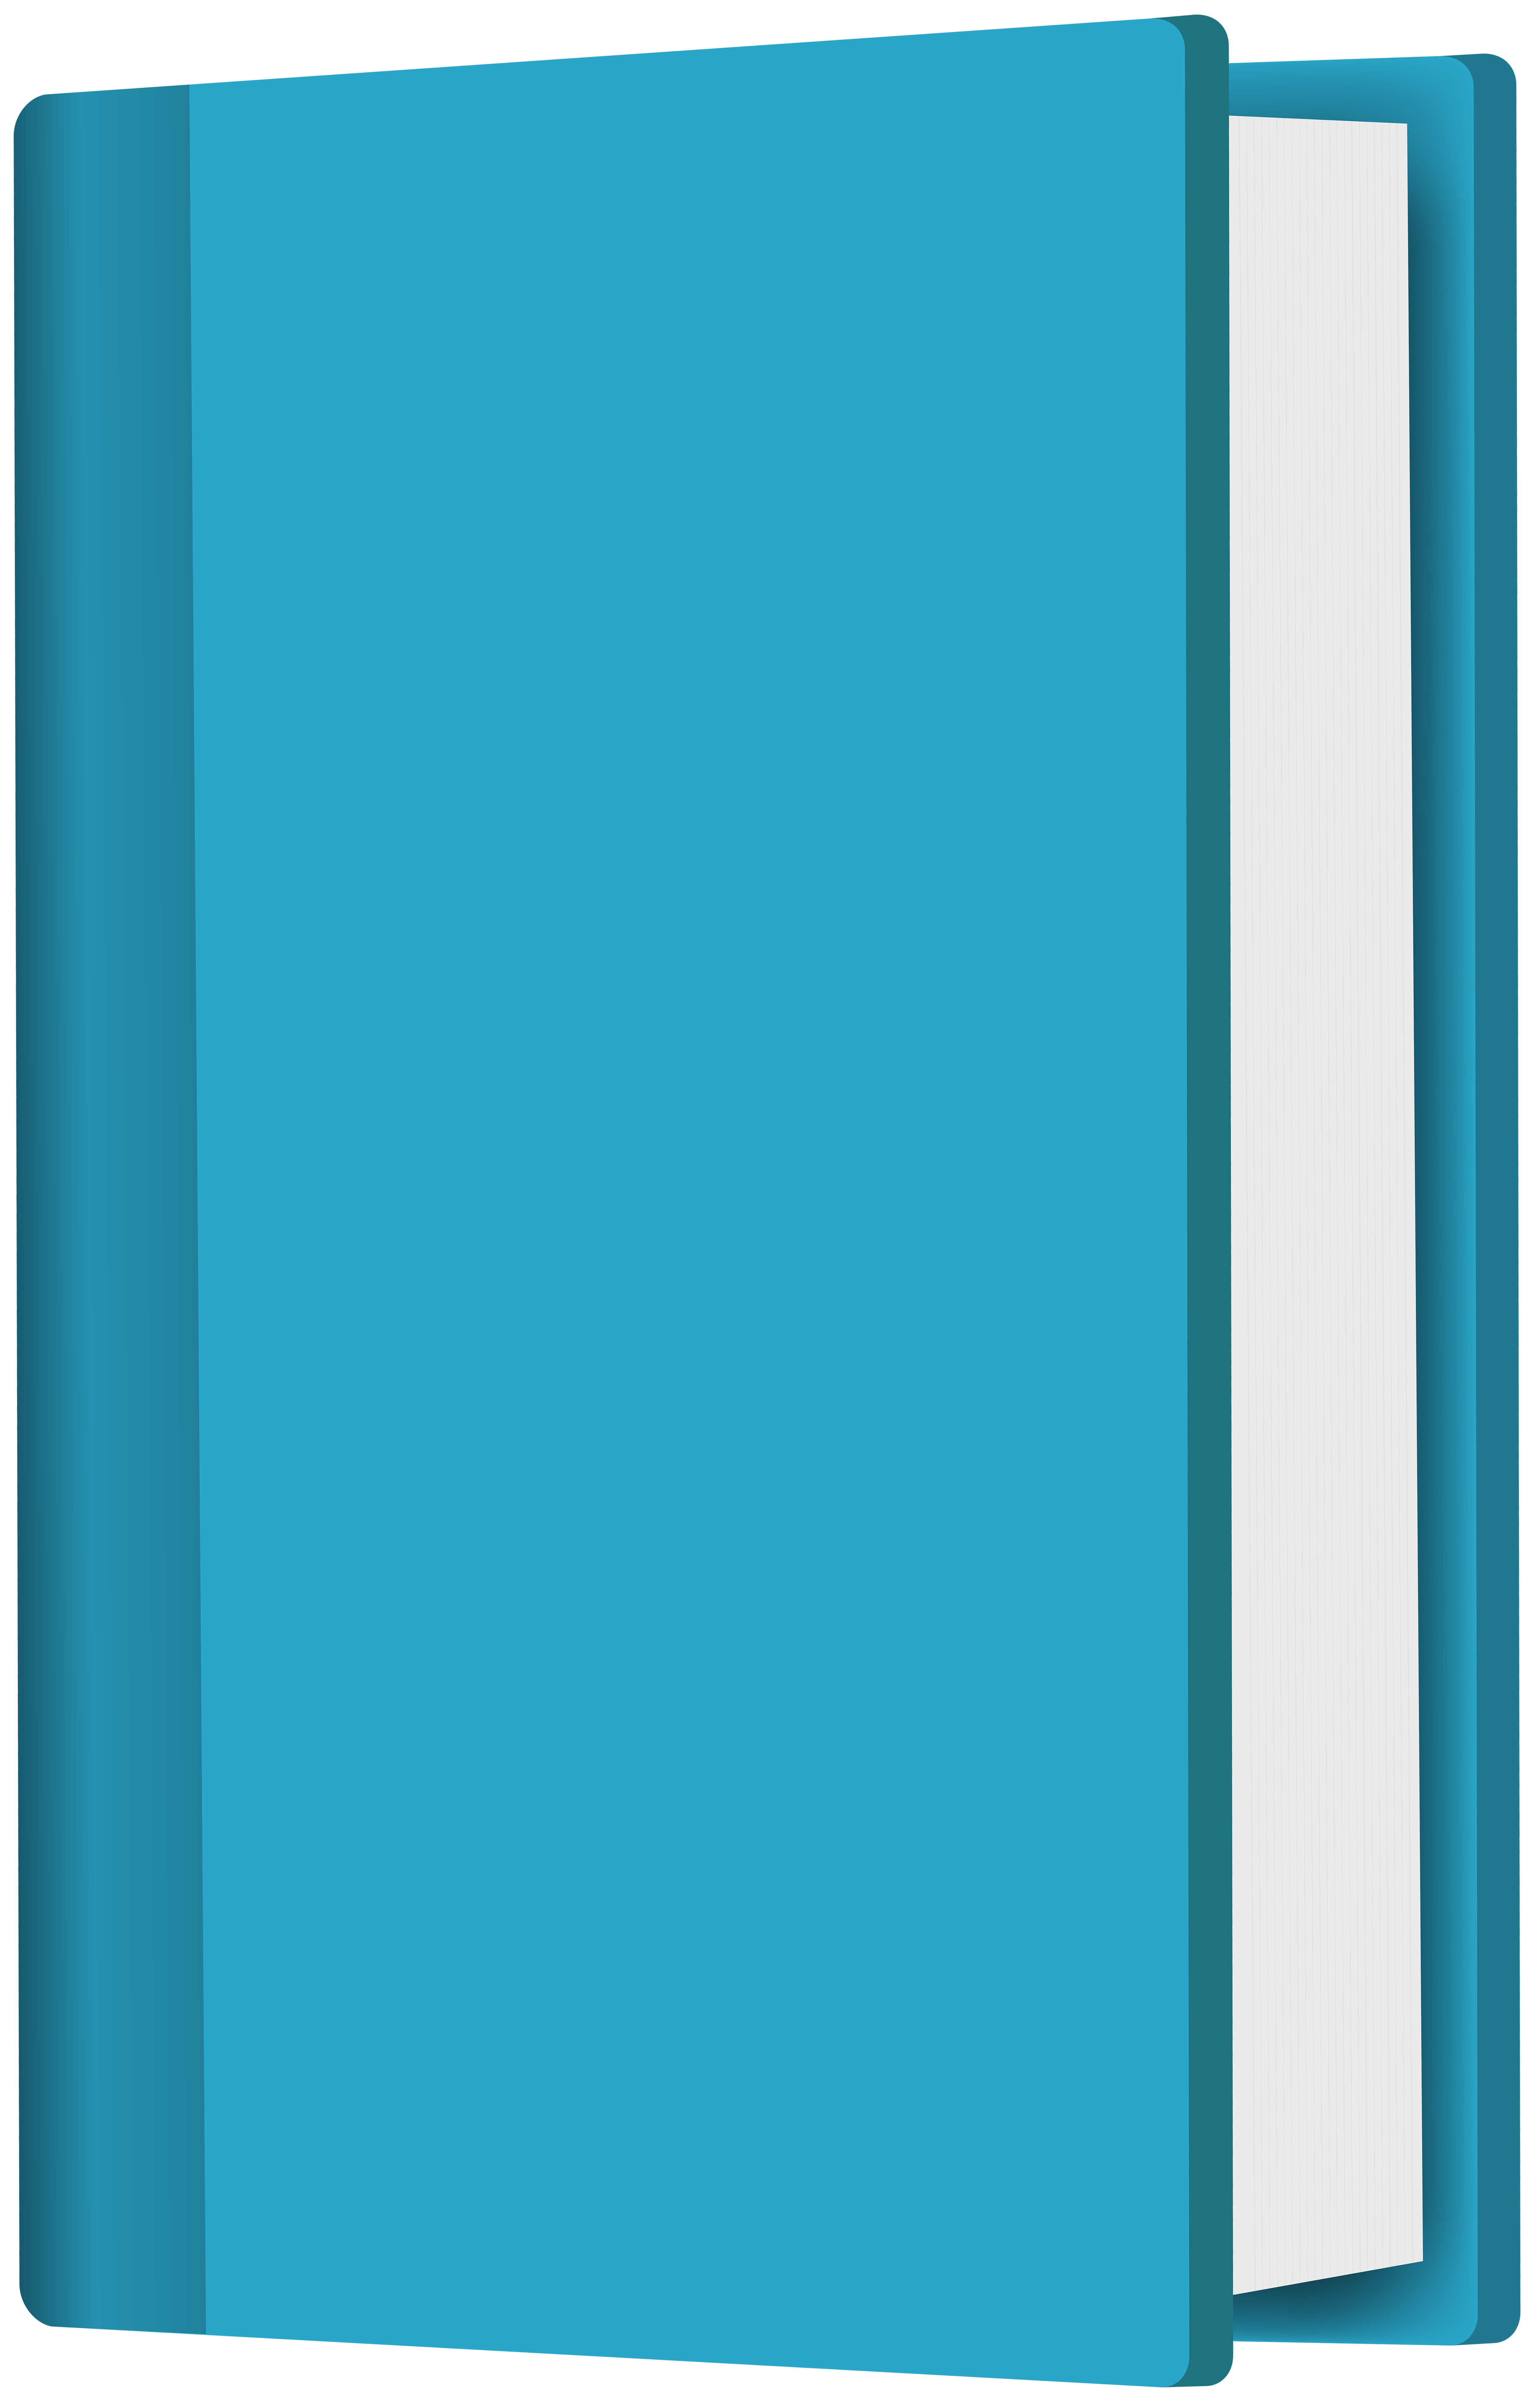 Book side. Книга синяя. Синяя книга на прозрачном фоне. Синяя книга без фона. Книжечка стоит голубая.